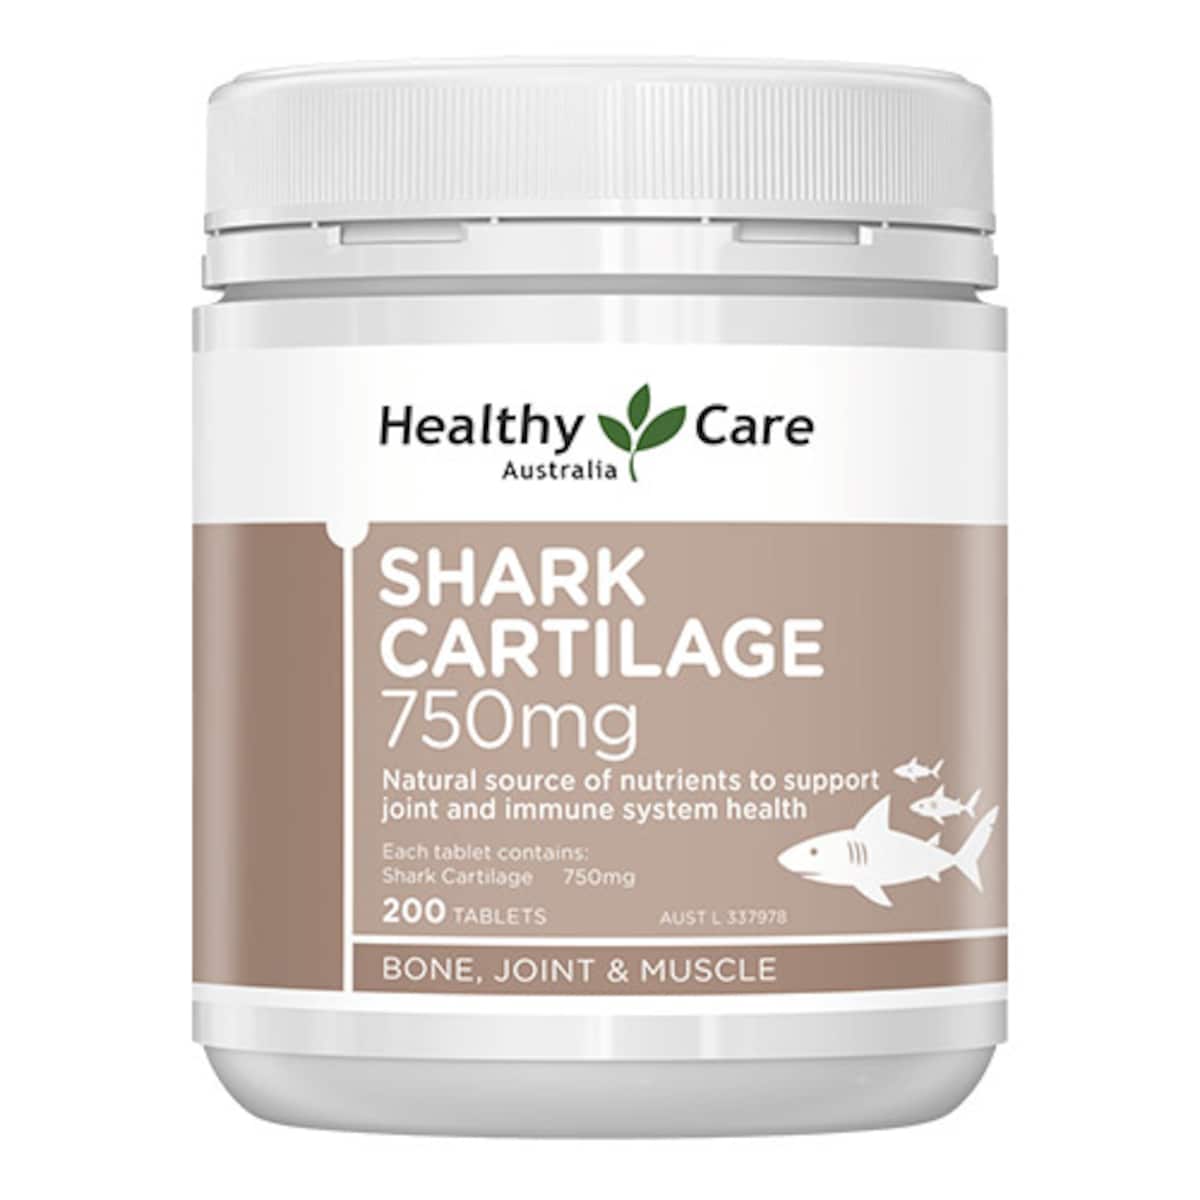 Healthy Care Shark Cartilage 750mg 200 Tablets Australia